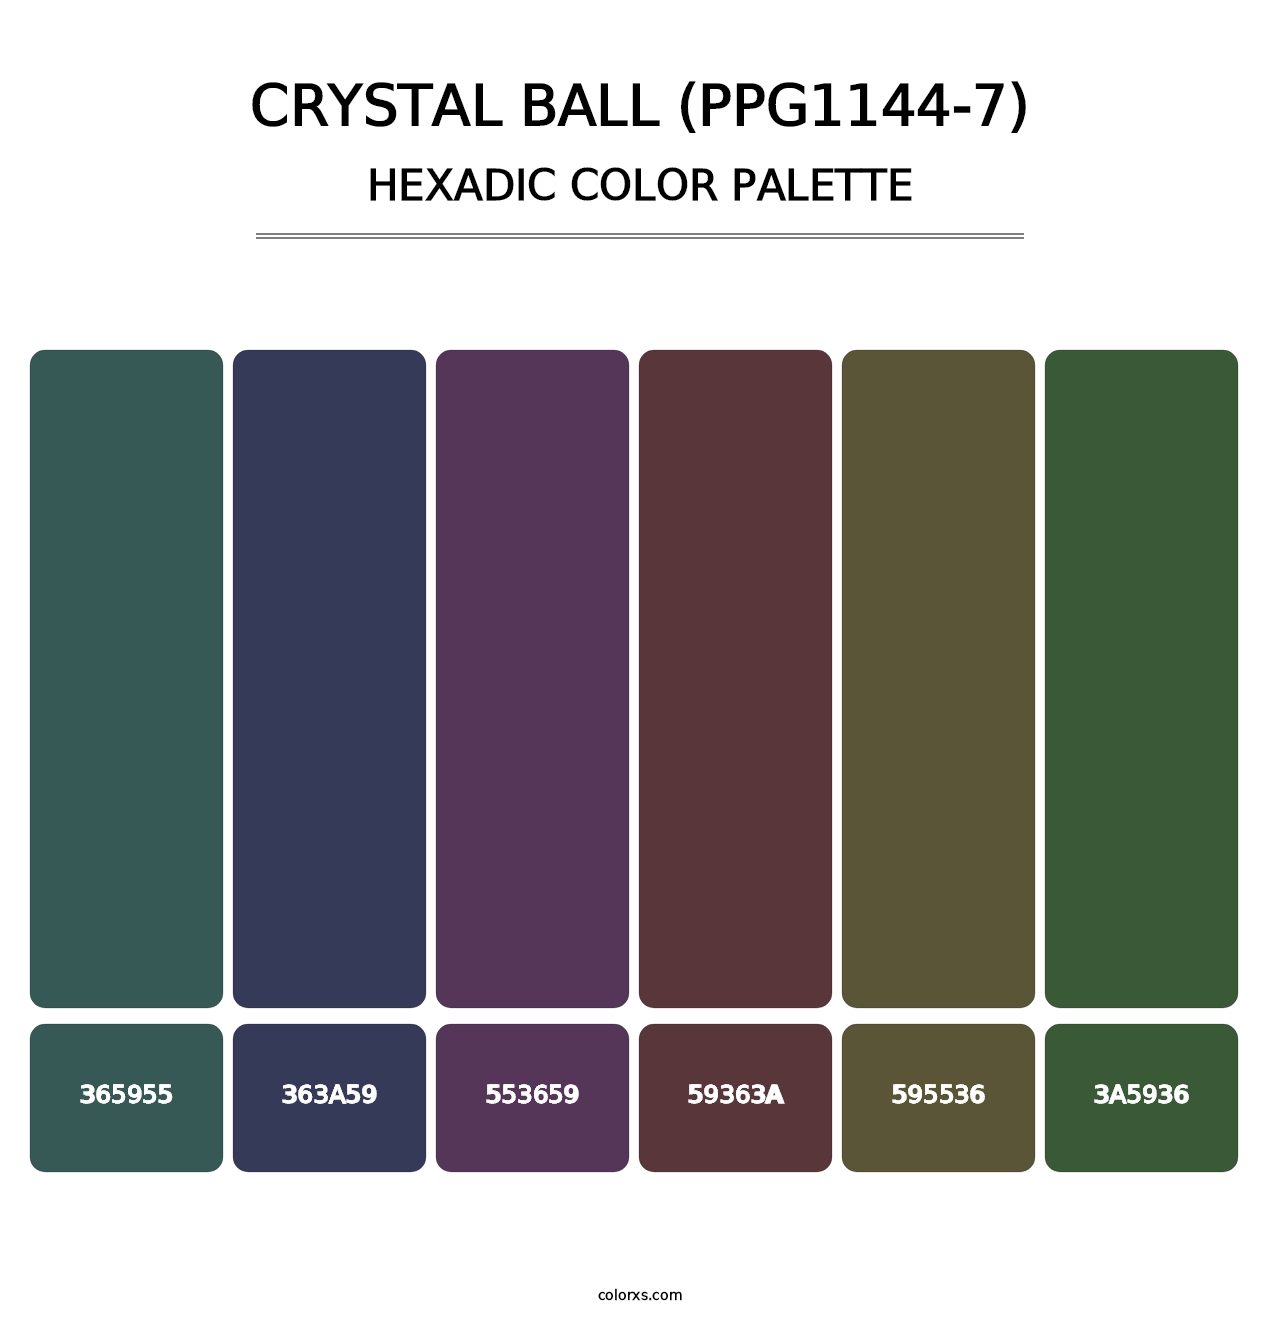 Crystal Ball (PPG1144-7) - Hexadic Color Palette